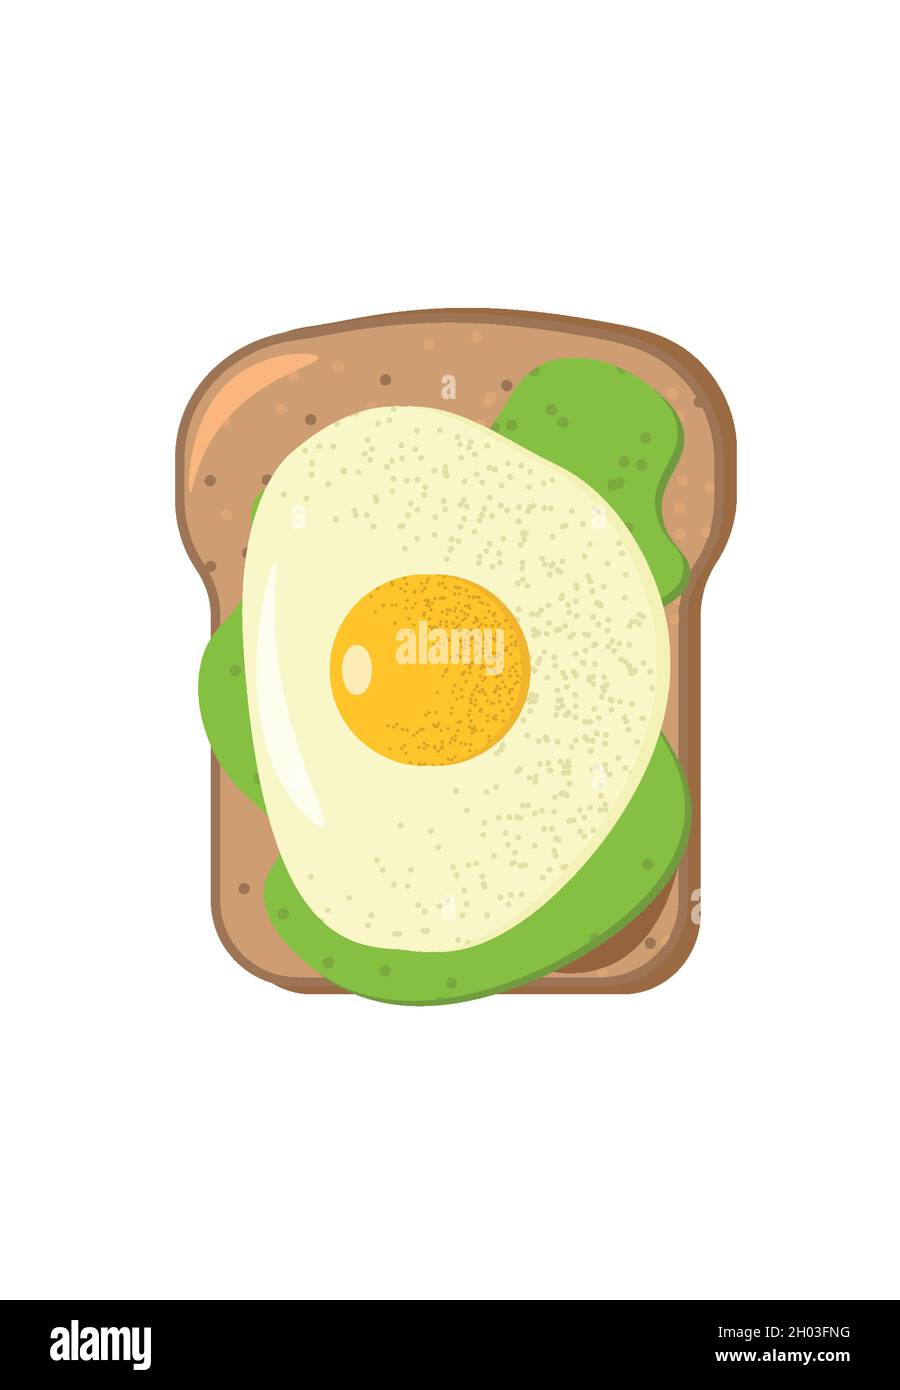 Avocado toast. Healthy wholesome breakfast with green avocado toast and egg Stock Vector